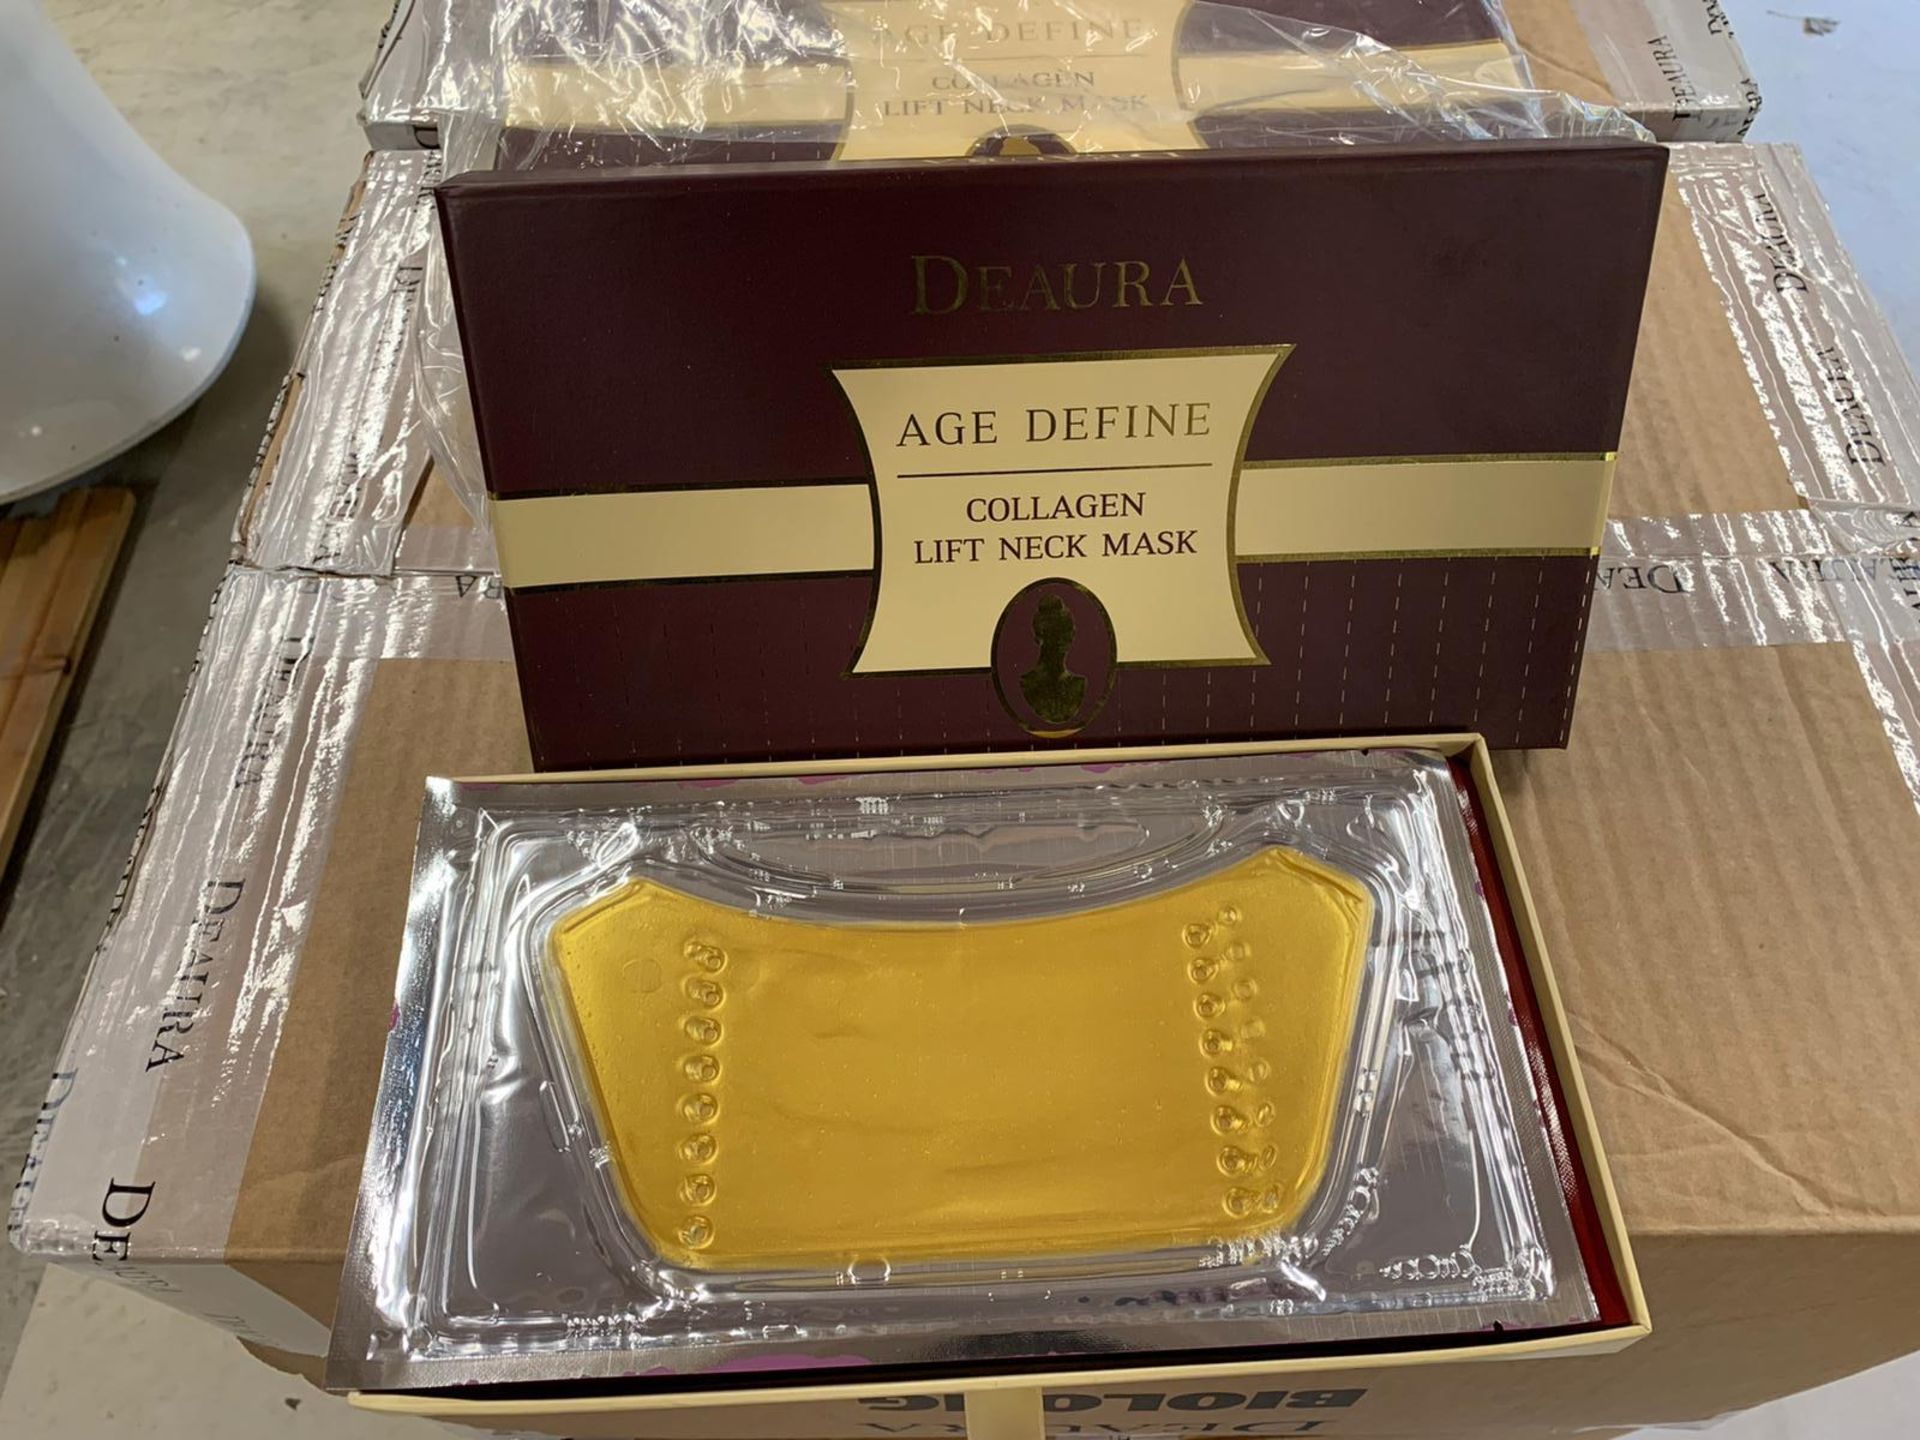 DEAURA Age Define Collagen Lift Neck Mask- 8 per box (16 boxes per lot)